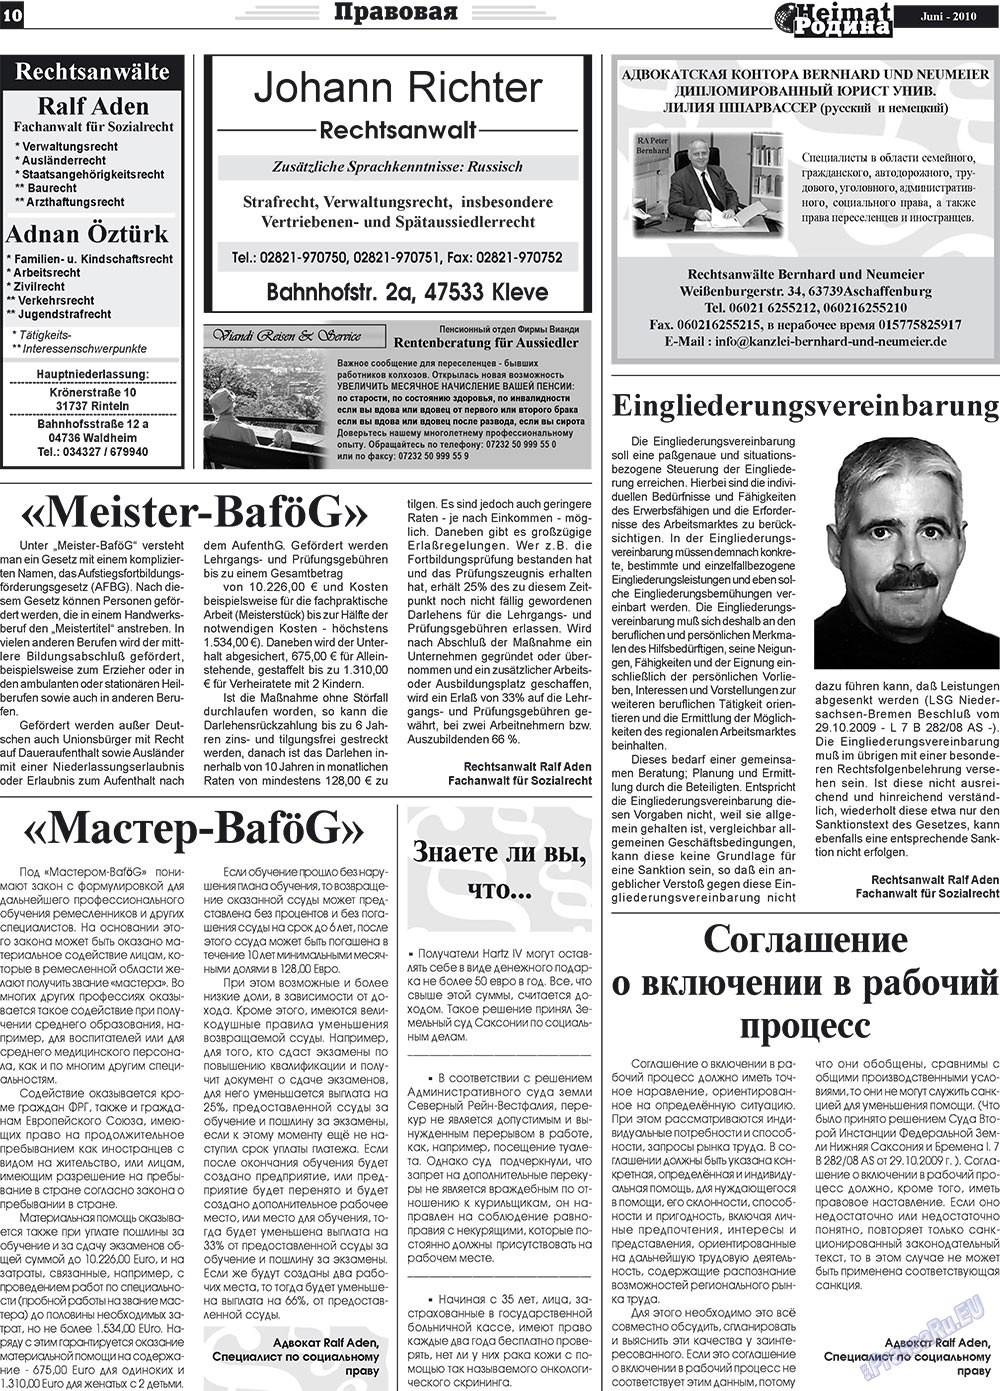 Heimat-Родина, газета. 2010 №6 стр.10